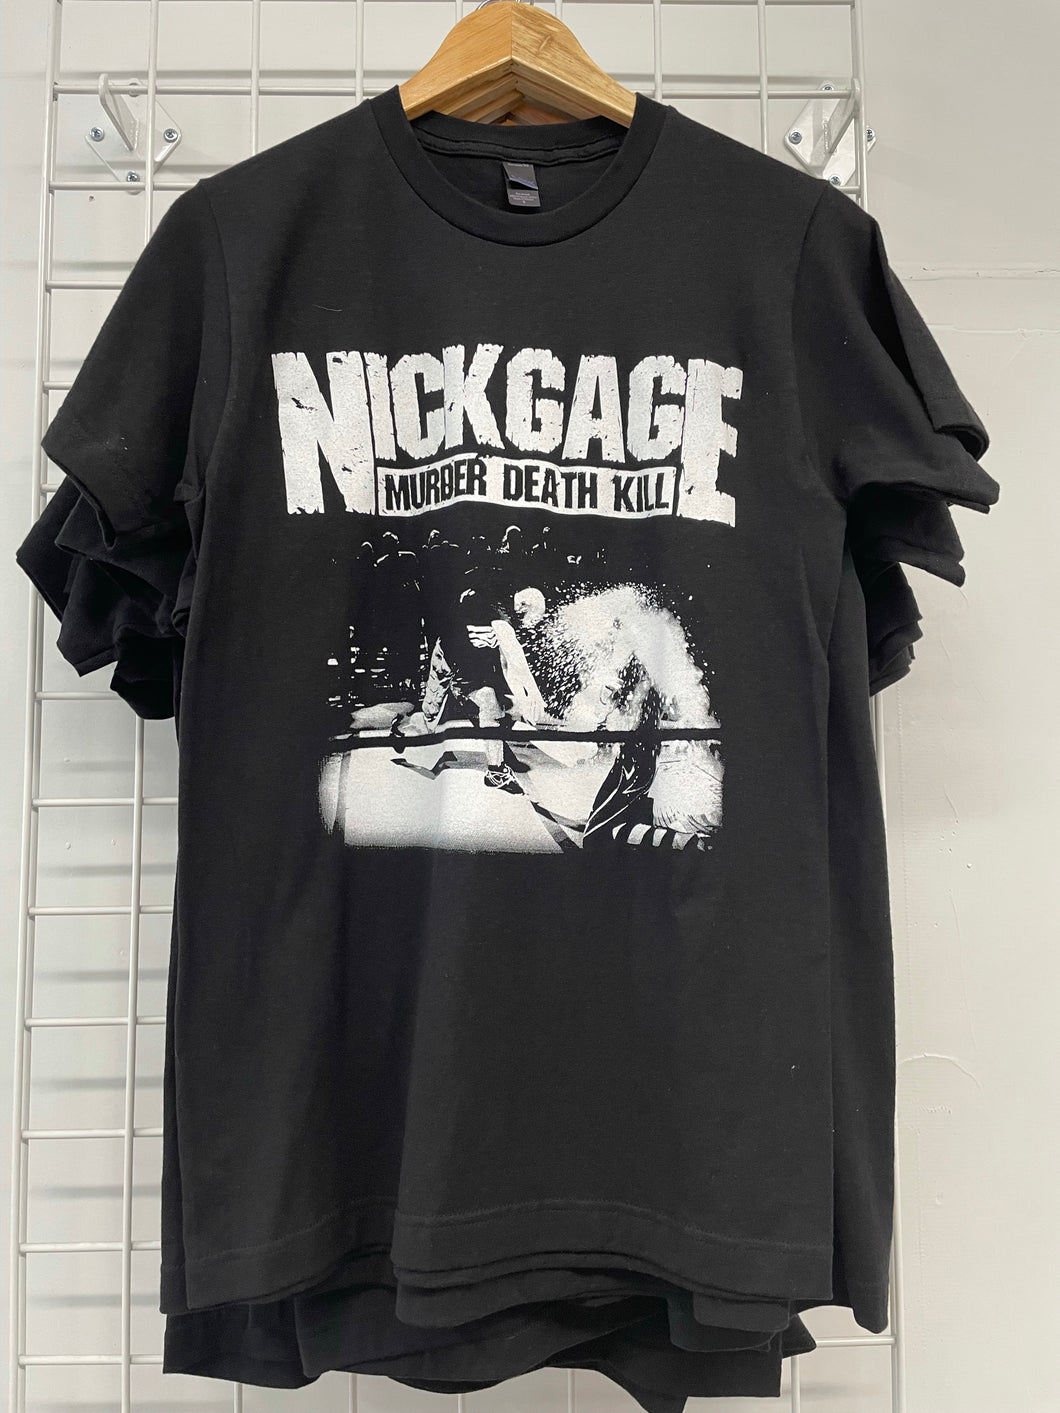 Nick Cage Murder Death Kill T-Shirt